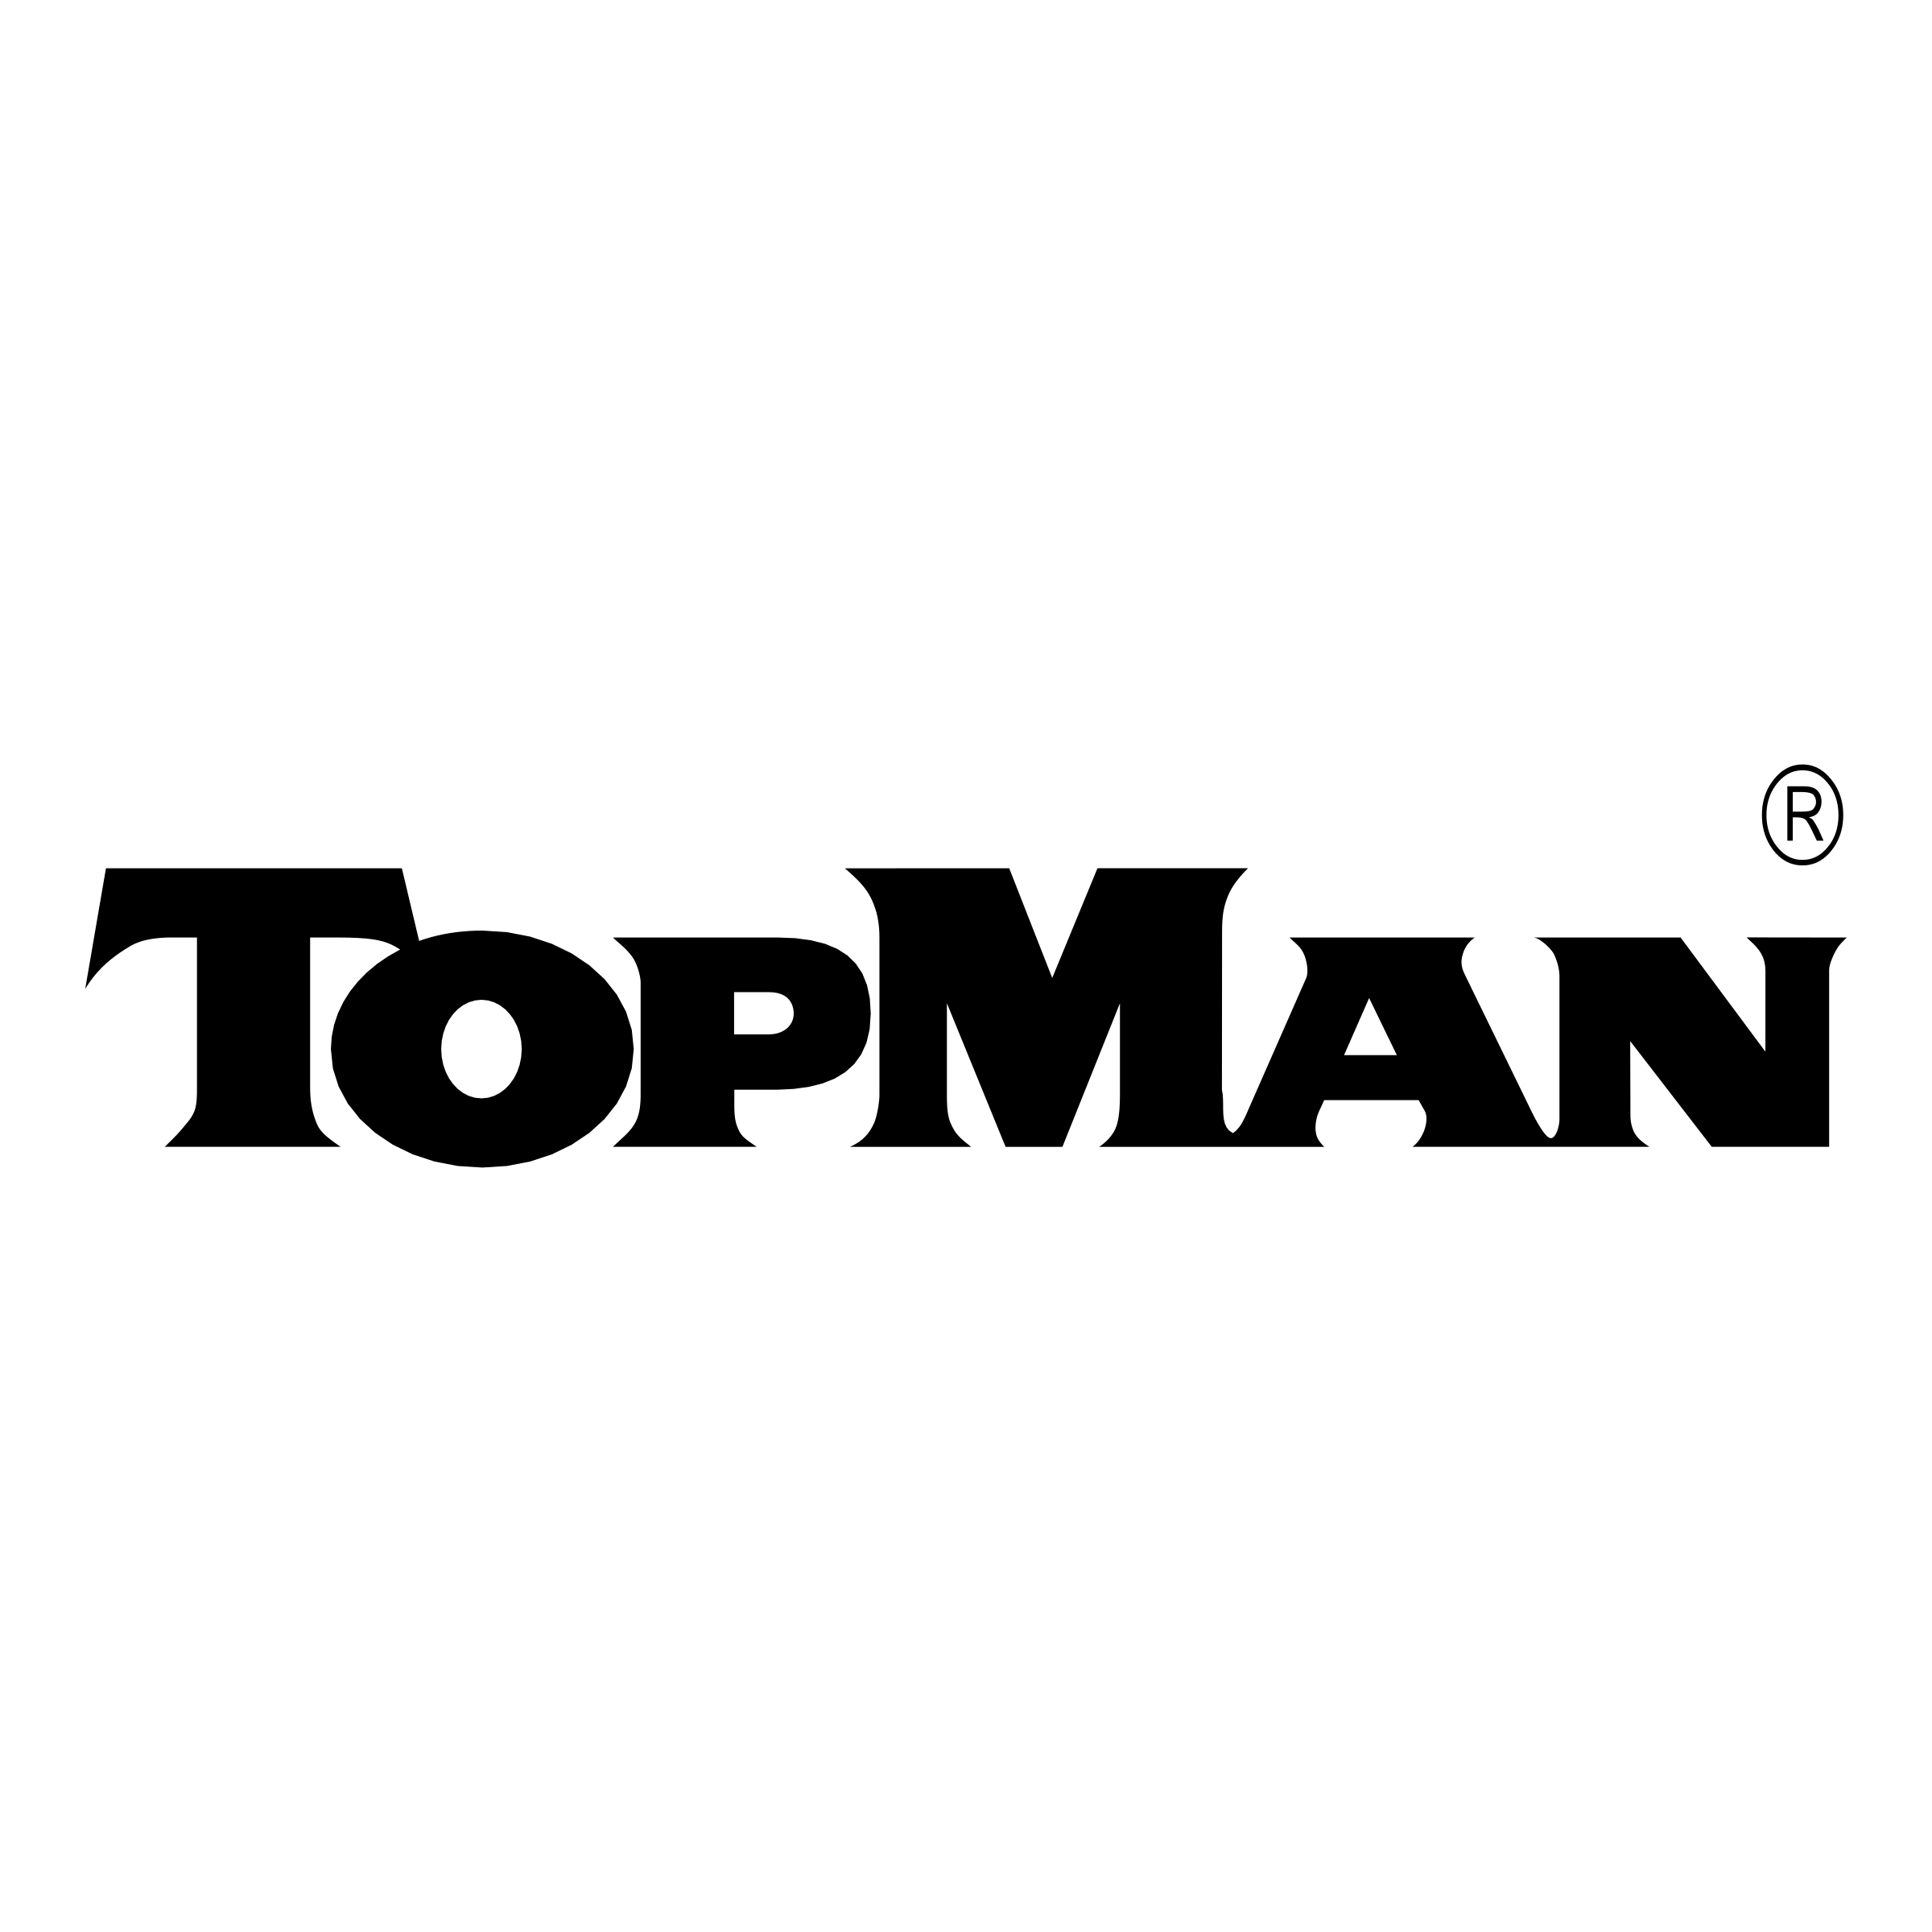 Topman Logo - TopMan Logo PNG Transparent & SVG Vector - Freebie Supply